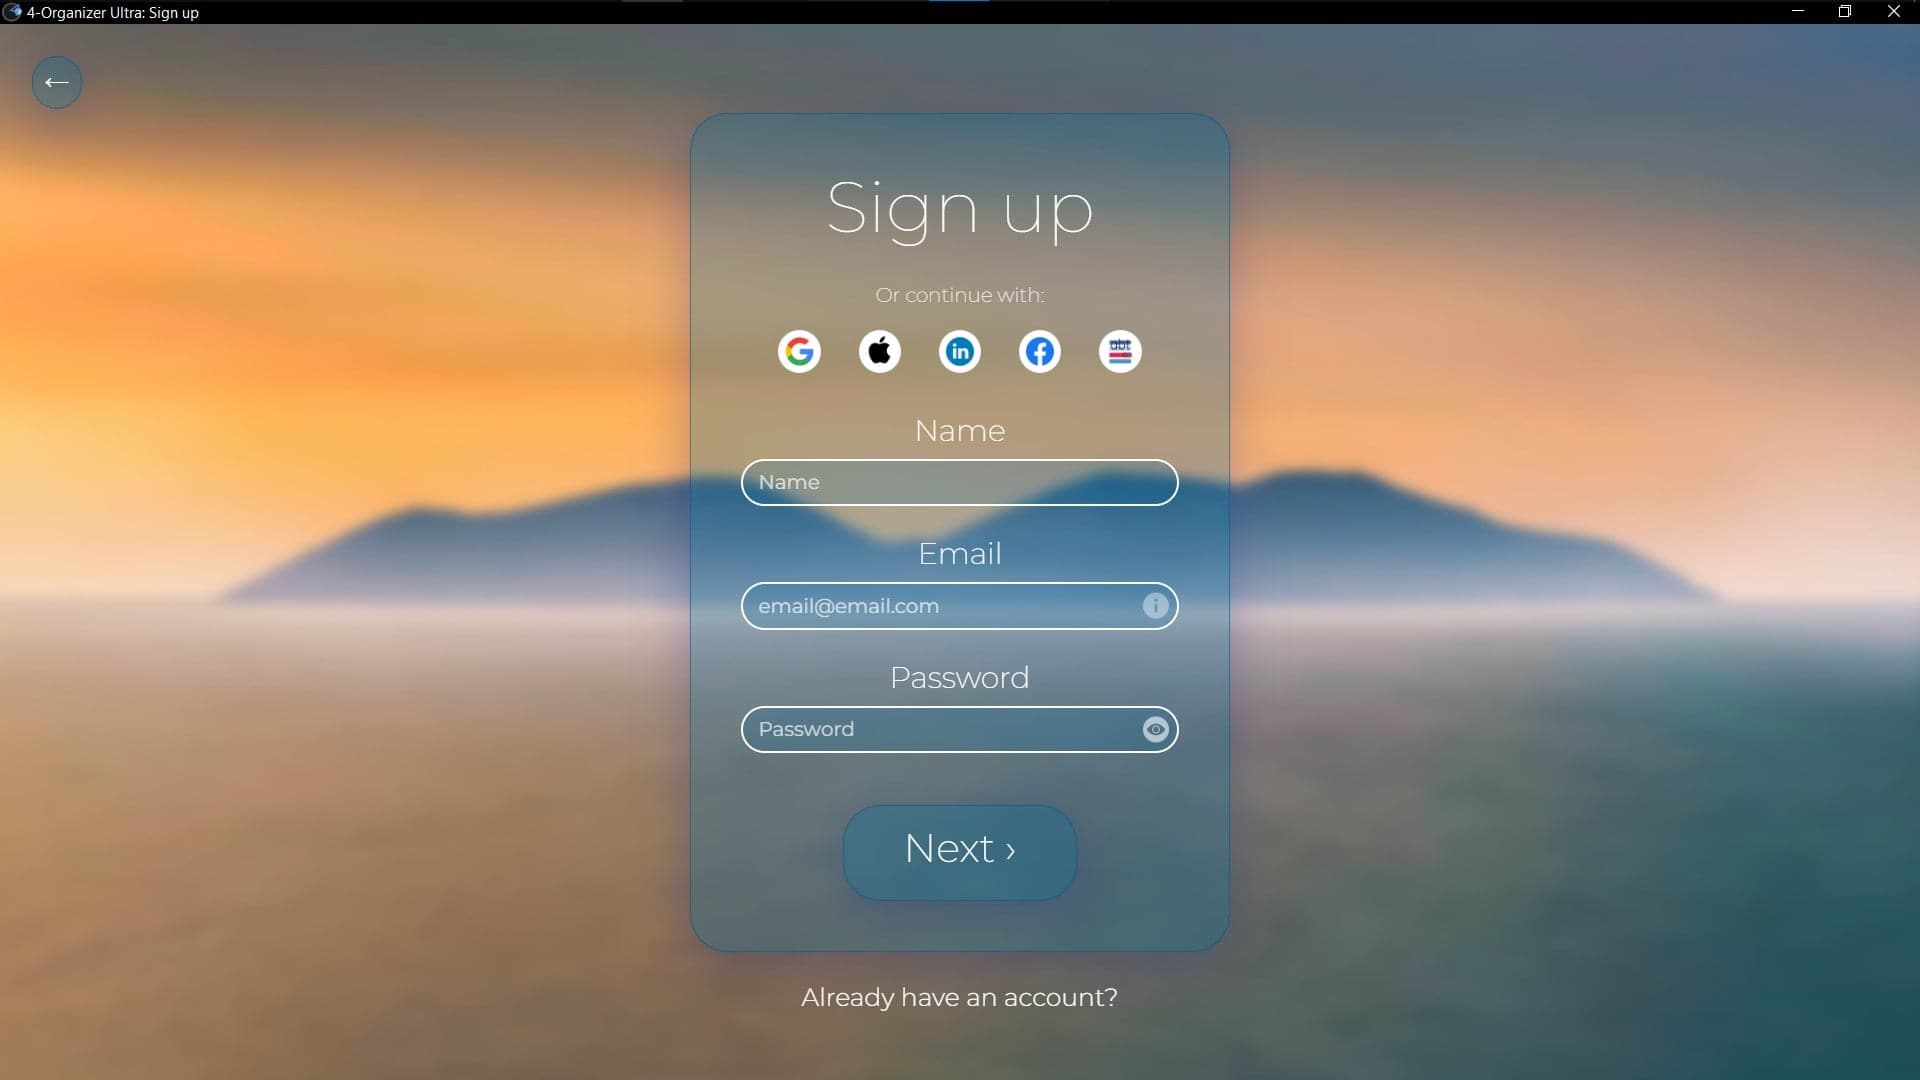 Screenshot of 'Sign up' window of 4-Organizer Ultra